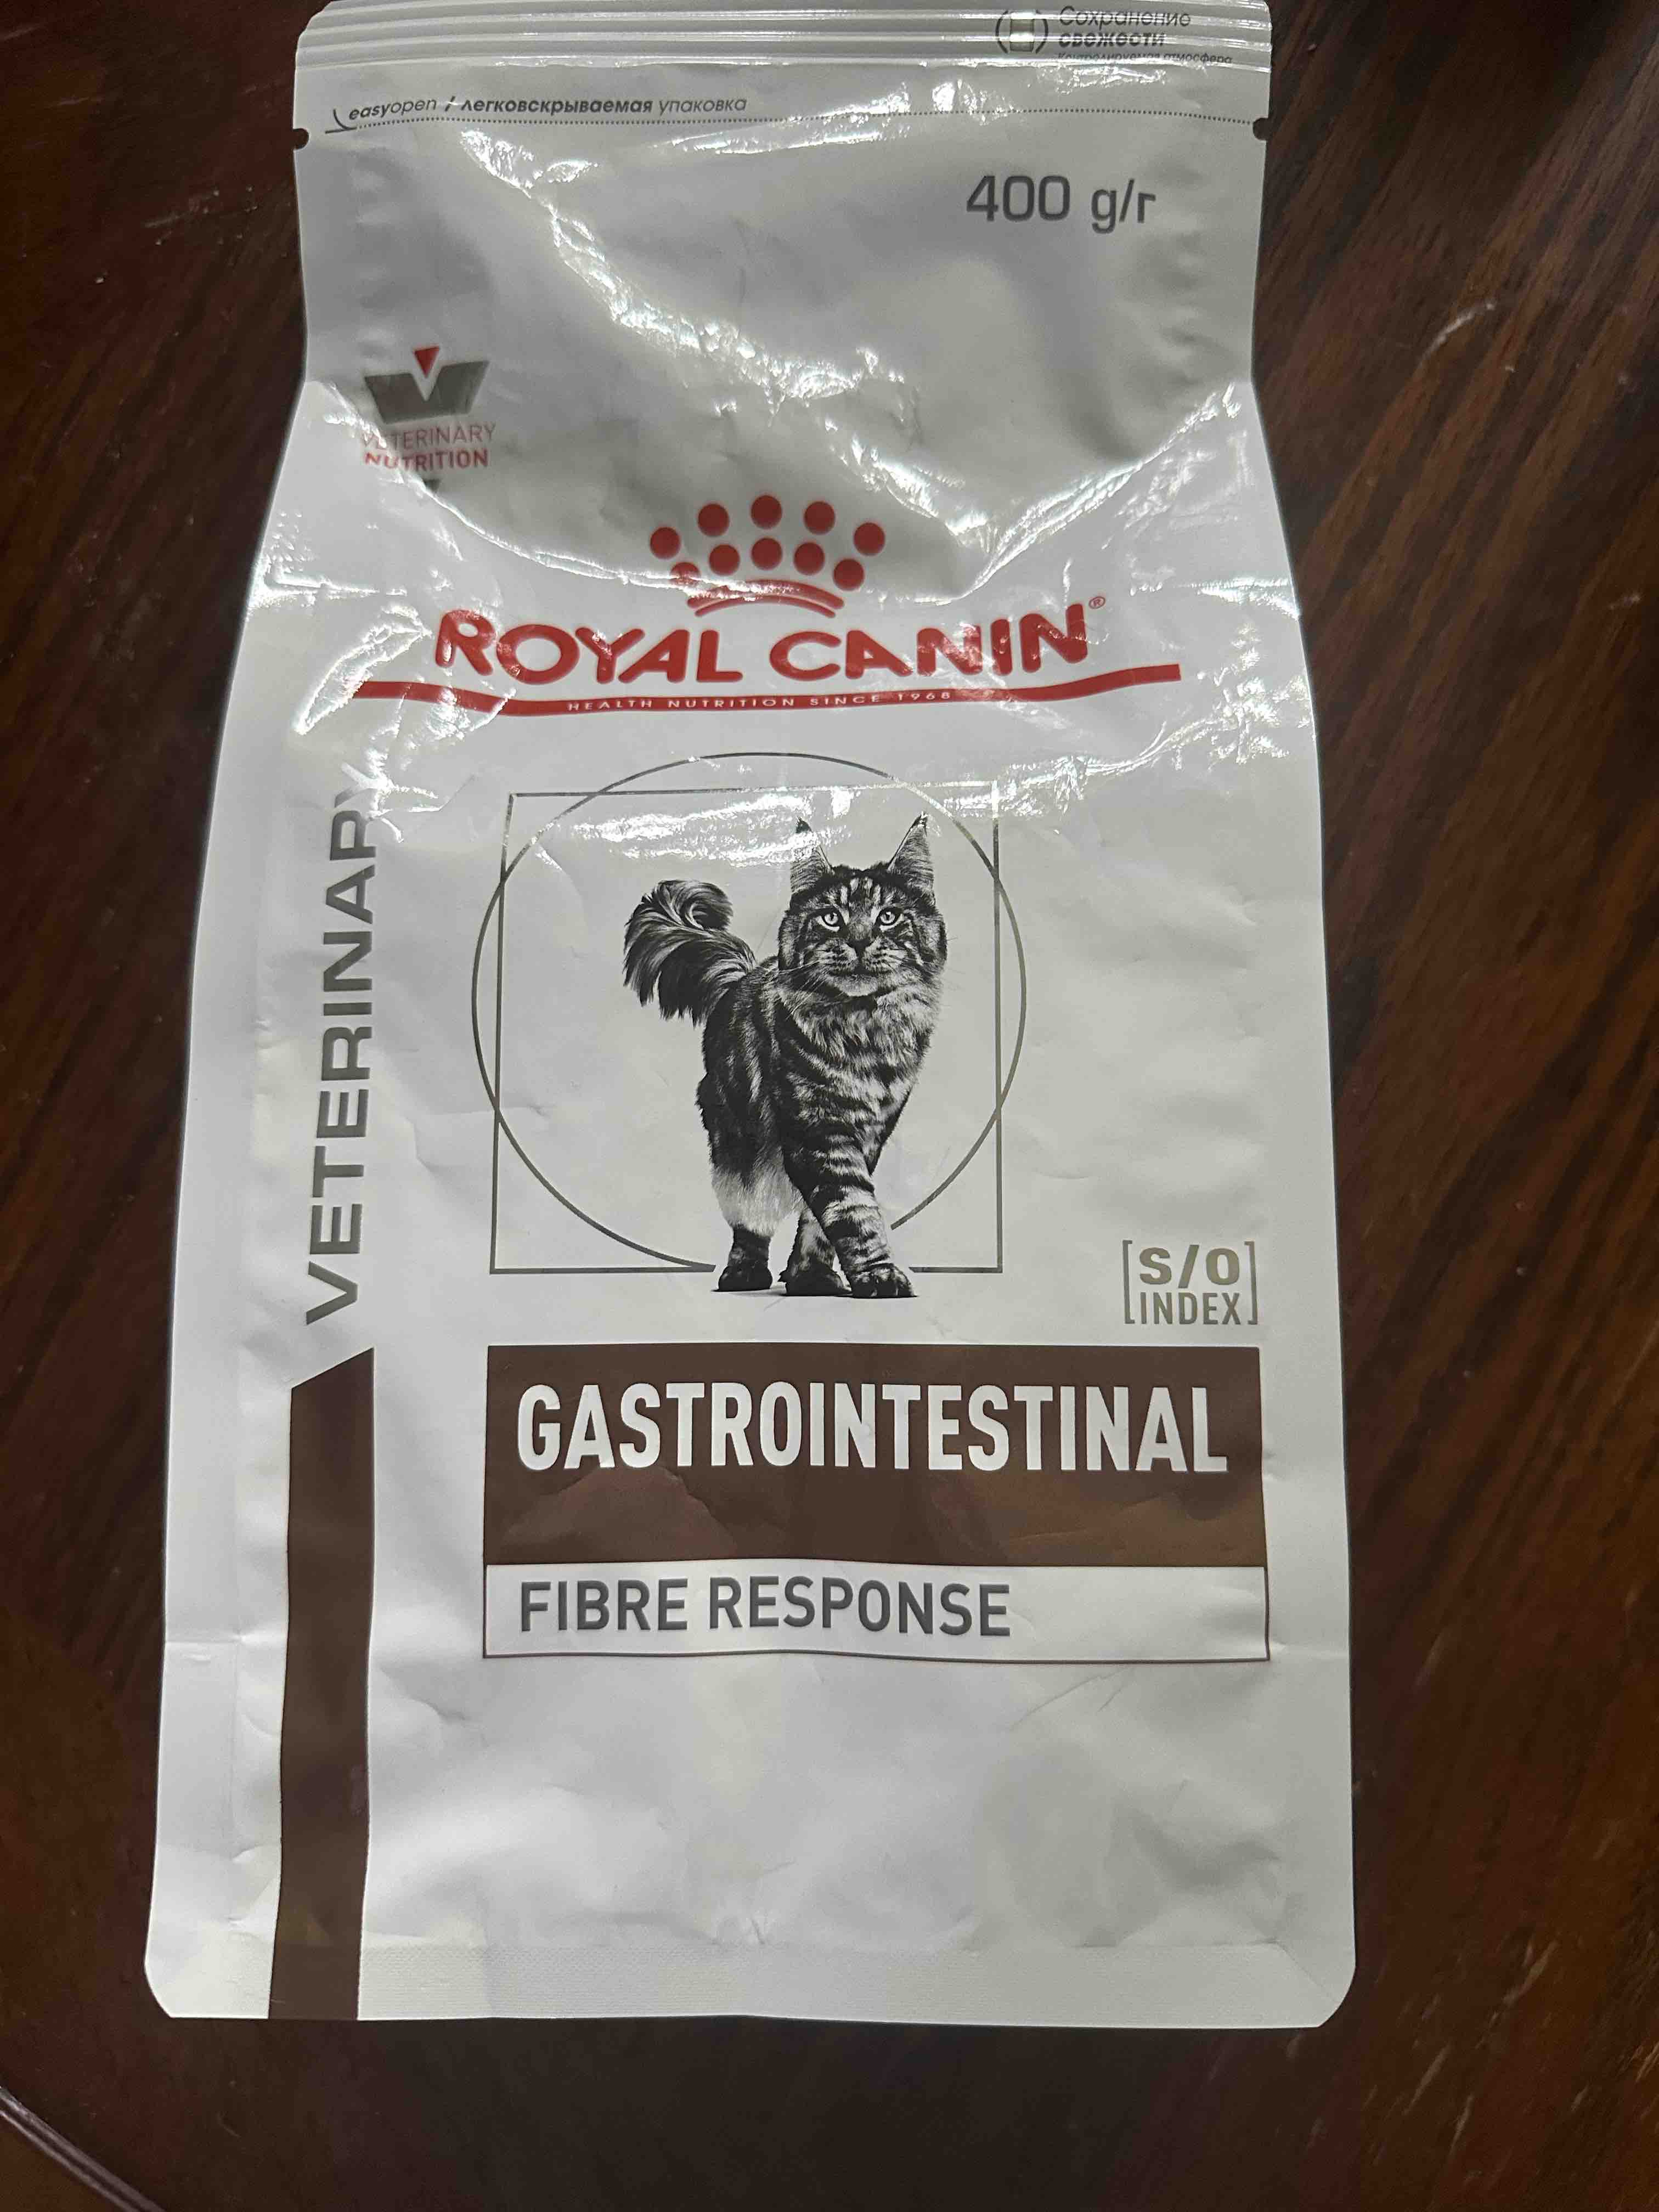 Корм для кошек royal canin fibre